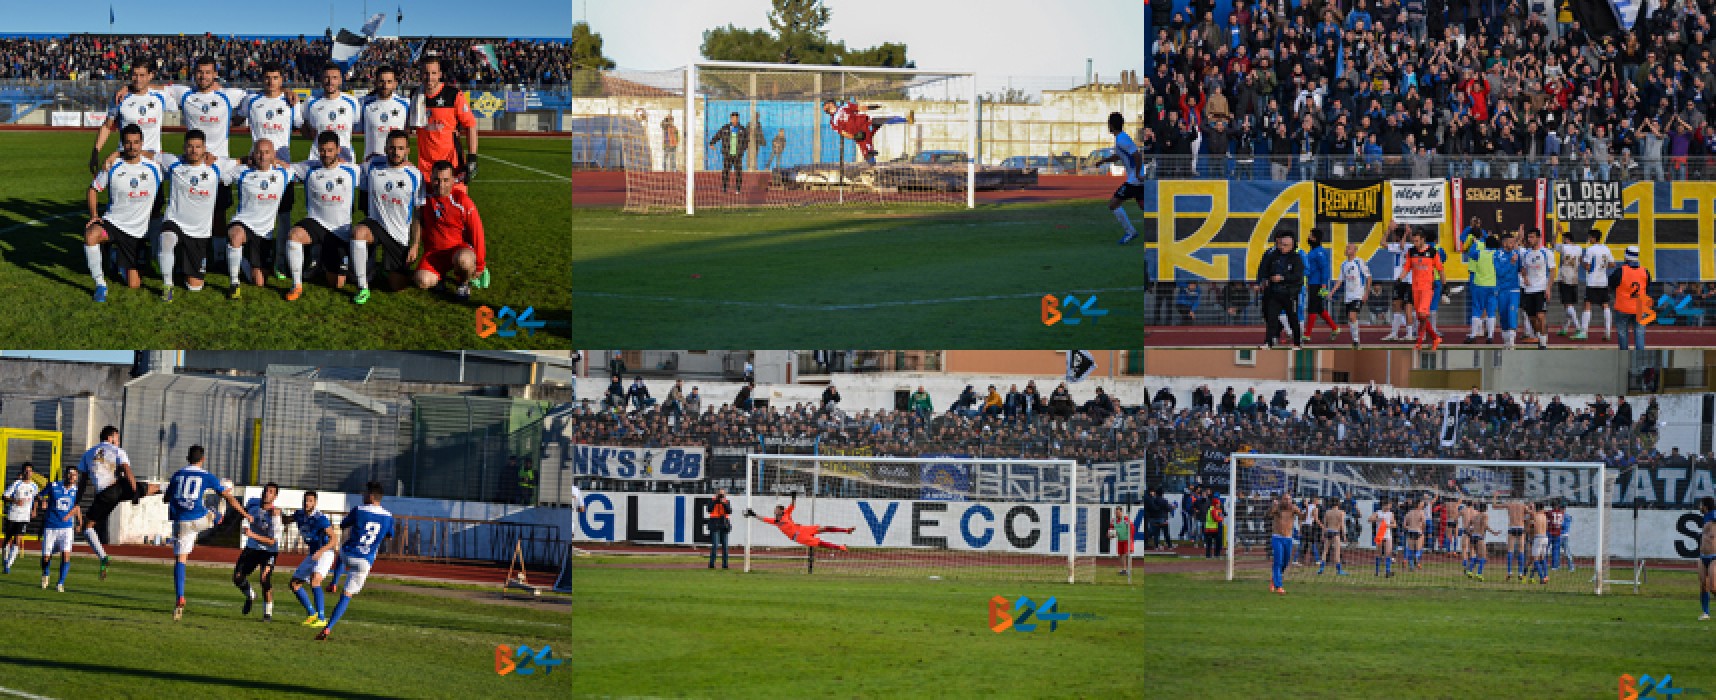 FOTOGALLERY del derby Bisceglie – Fidelis Andria 2-3